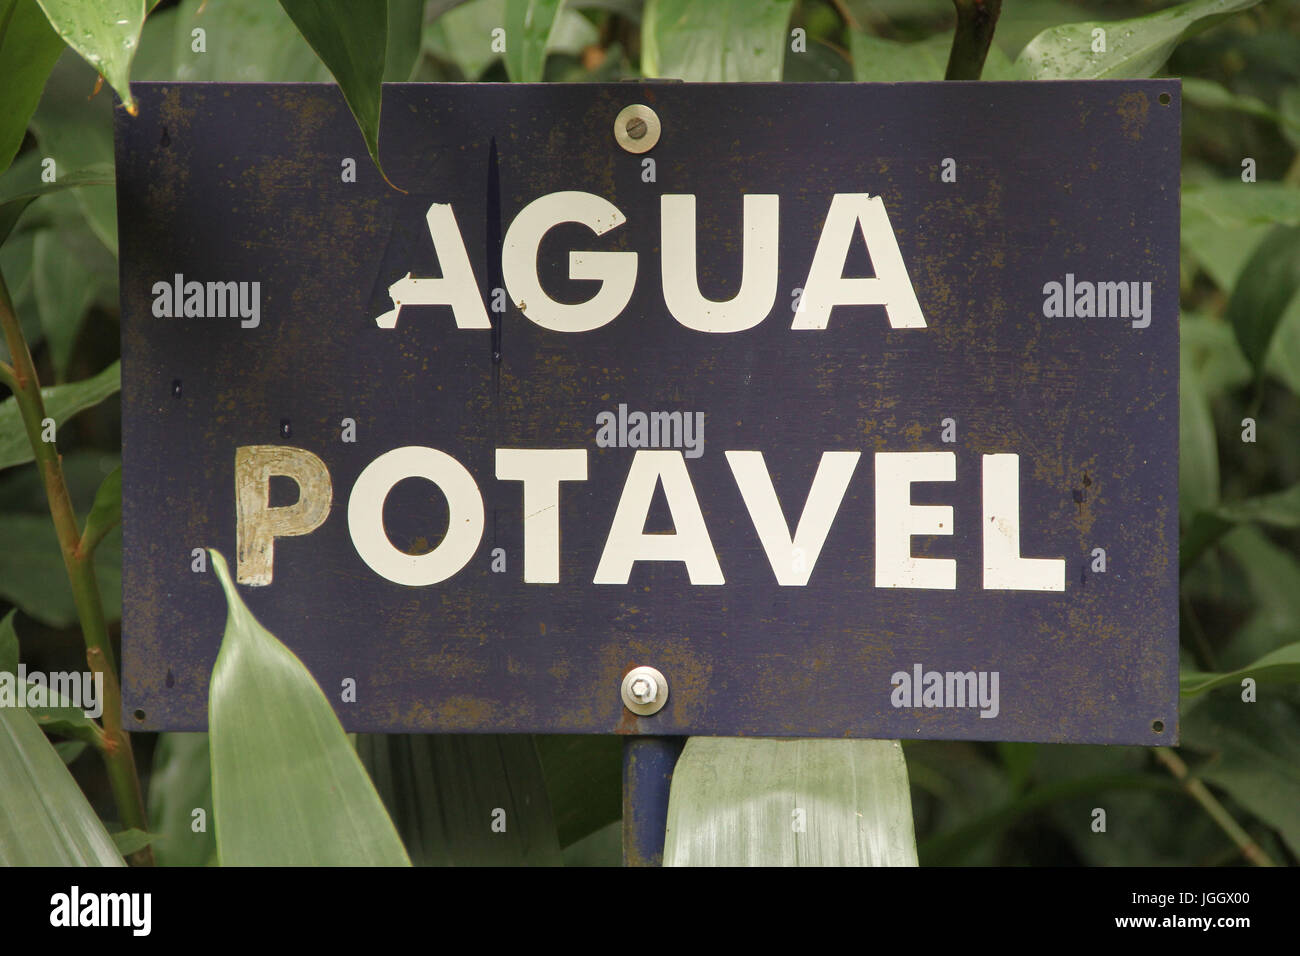 L'eau potable, un conseil, 2016, Parc Ecológico Quedas do Rio Bonito, Lavras, Minas Gerais, Brésil. Banque D'Images